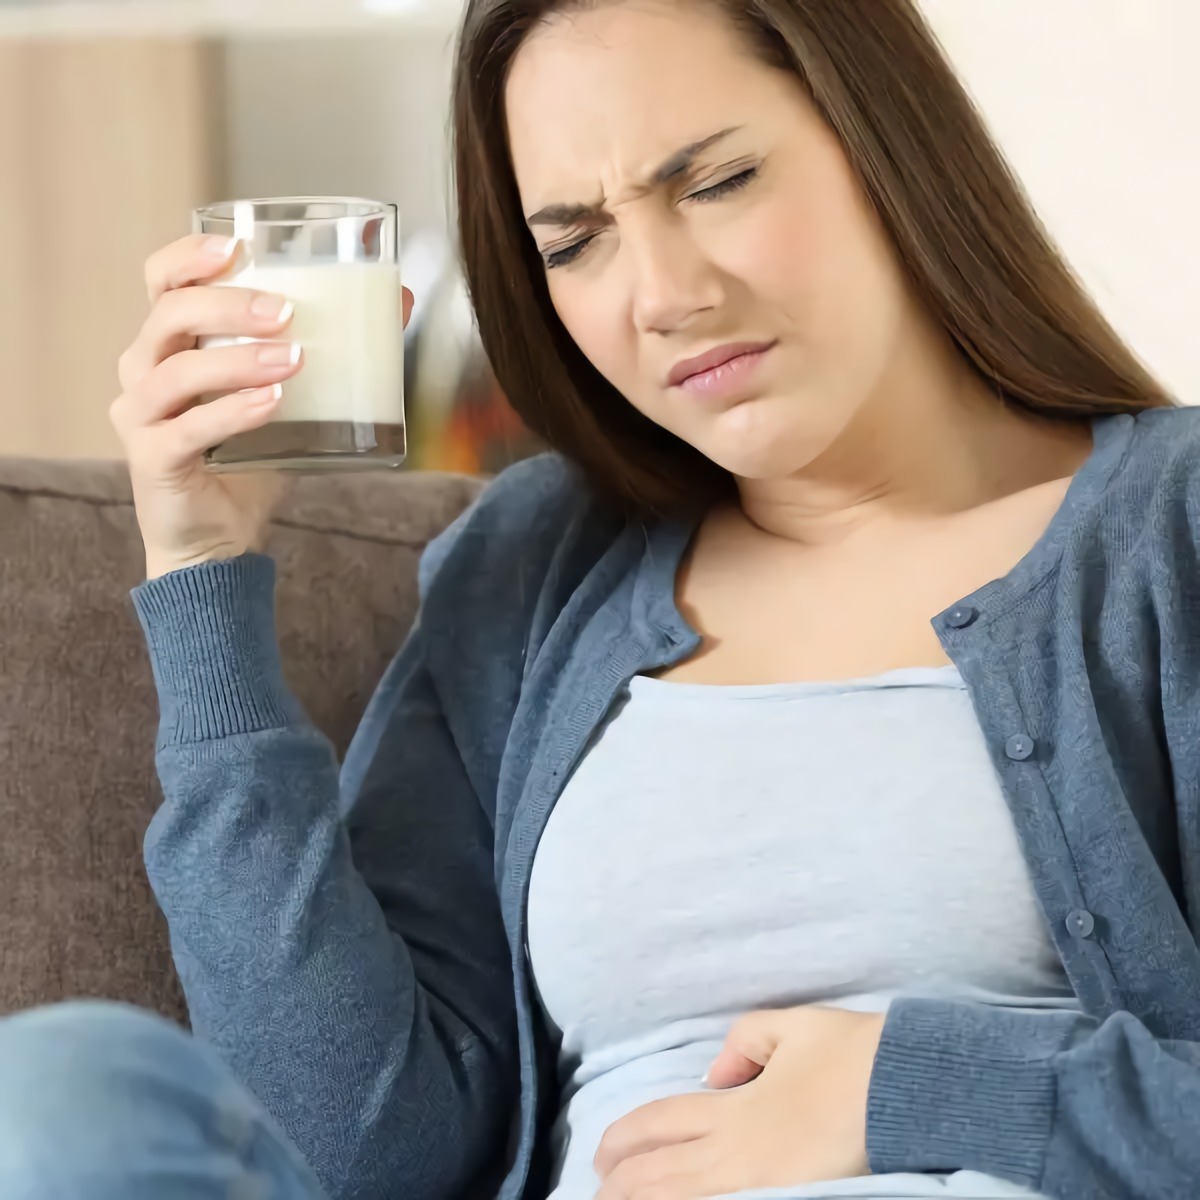 wie kann man merken dass man laktoseintoleranz hat laktoseintoleranz mit alter junge frau am sofa haelt glas milch leidet an bauchschmerzen